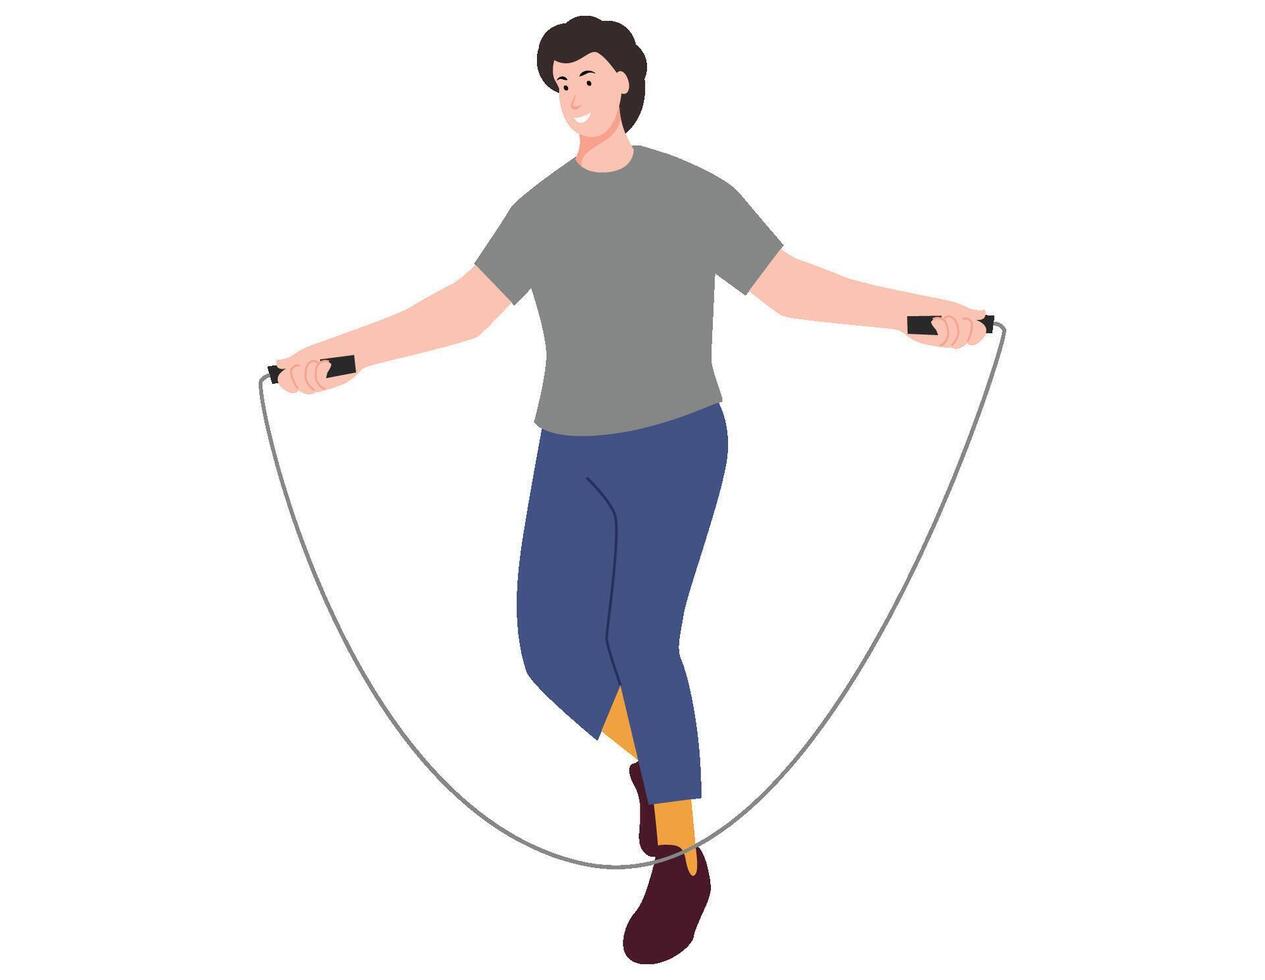 Jumping guy skipping rope illustration. vector